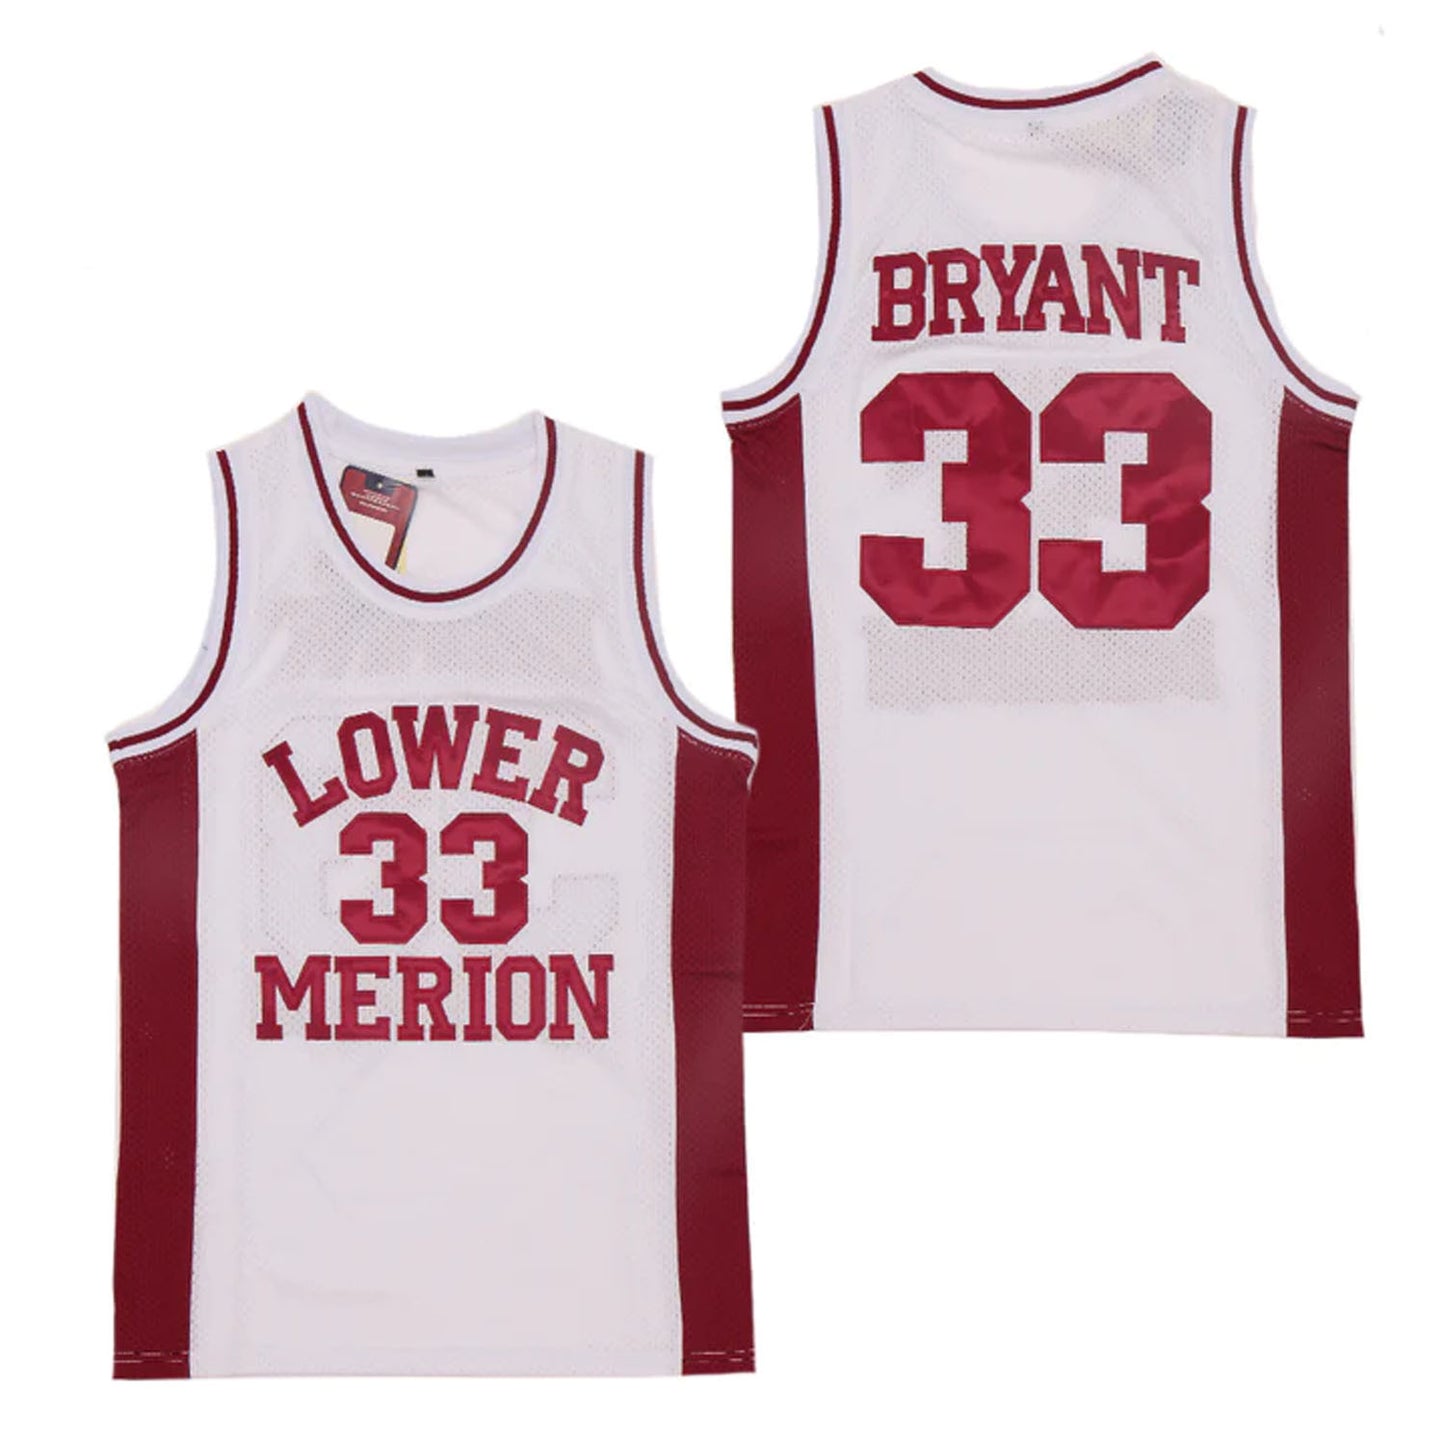 Kobe Bryant Lower Merion High School 33 Jersey